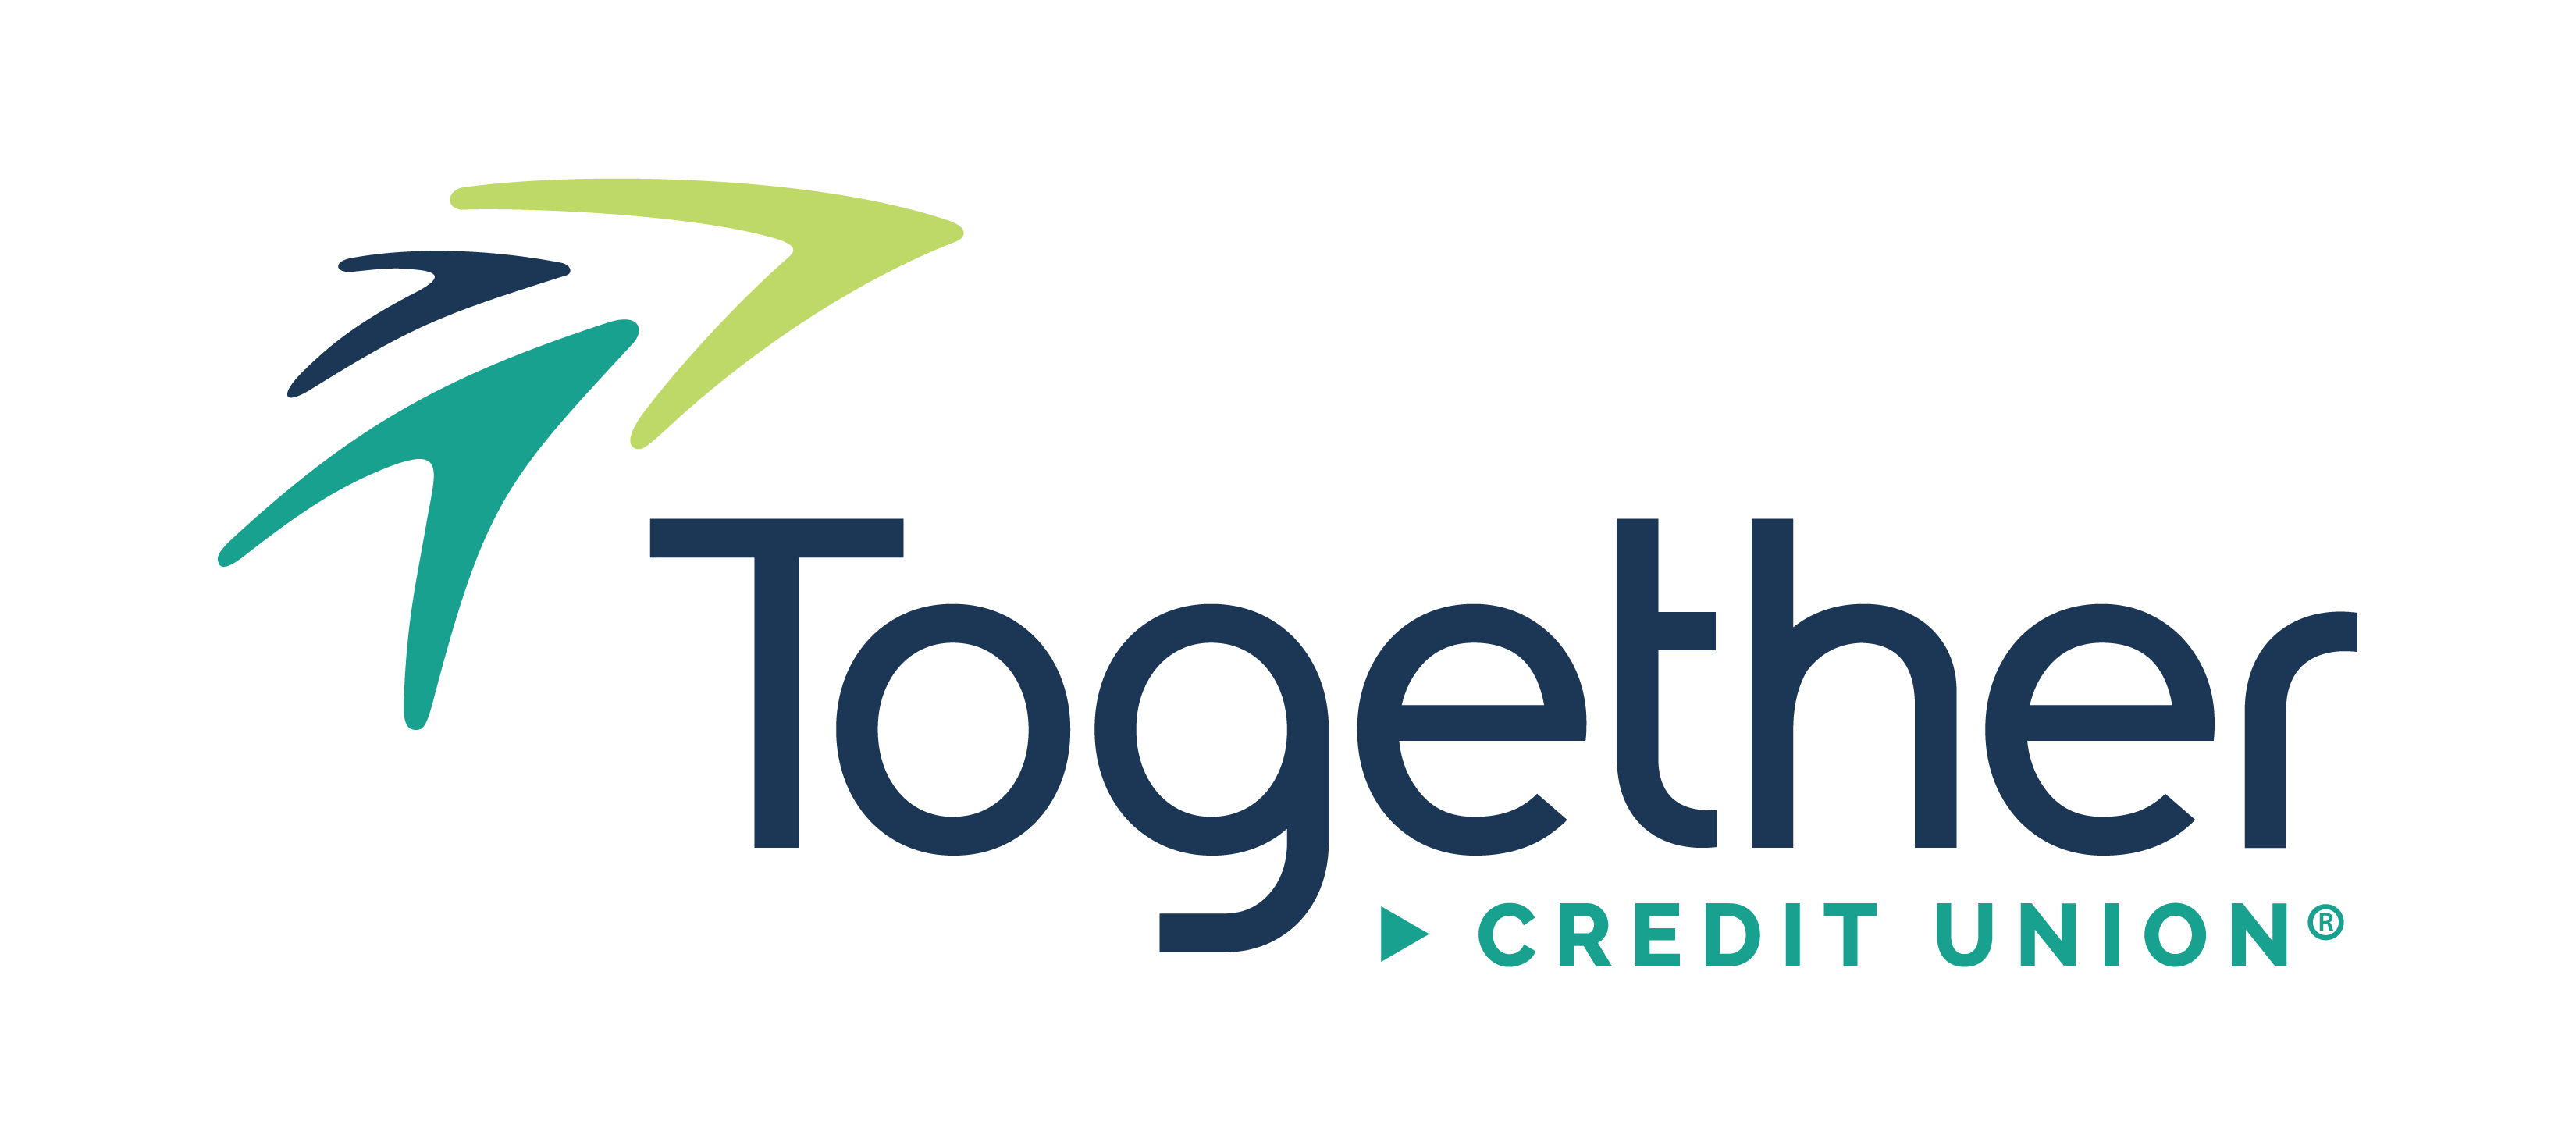 Together Credit Union Company Logo